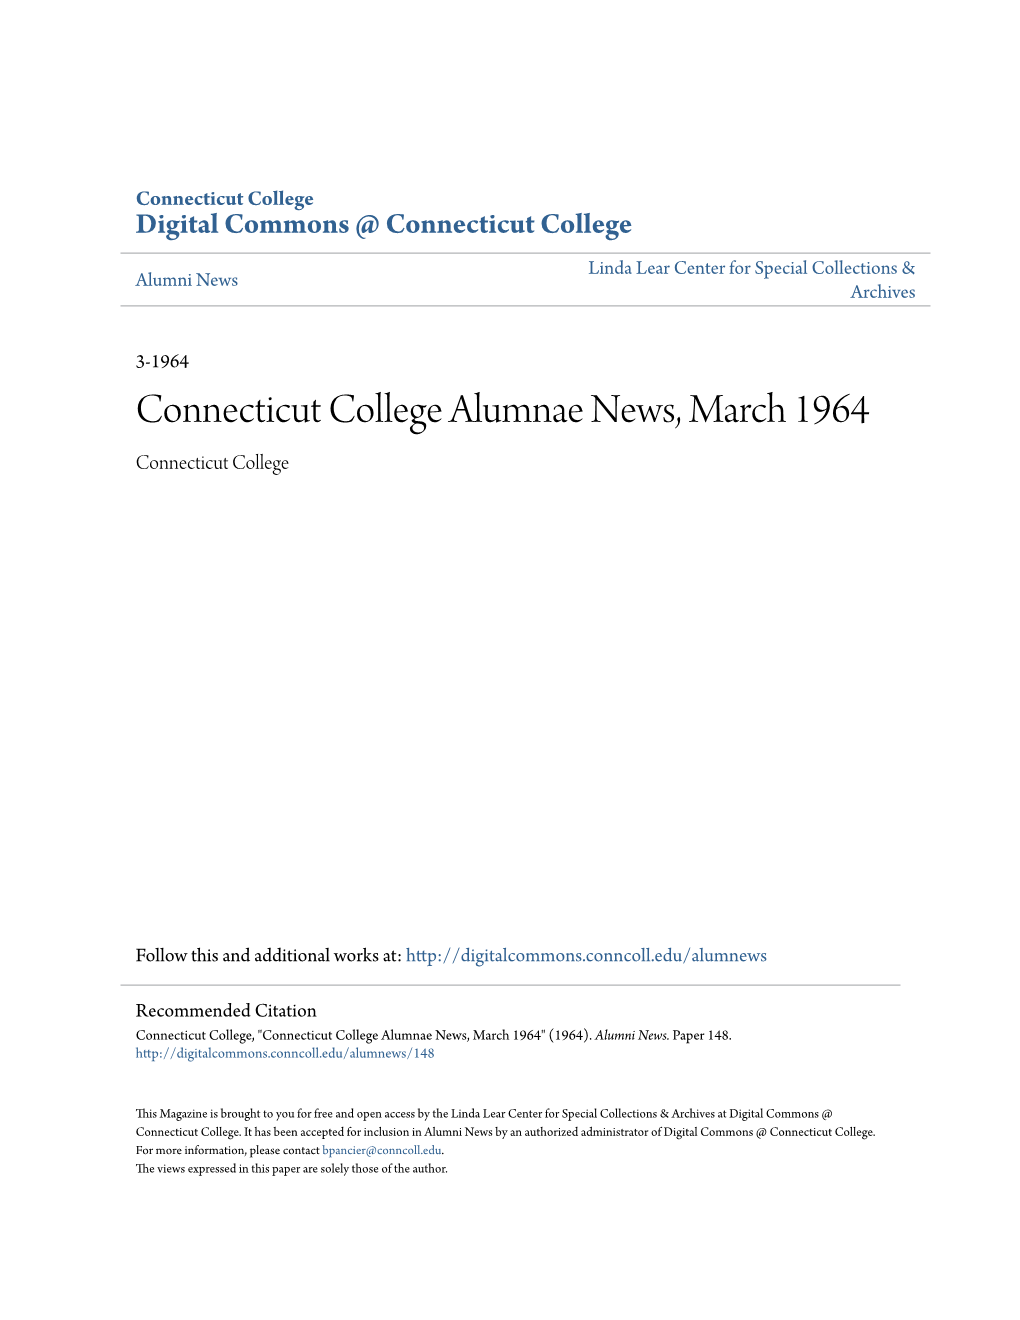 Connecticut College Alumnae News, March 1964 Connecticut College